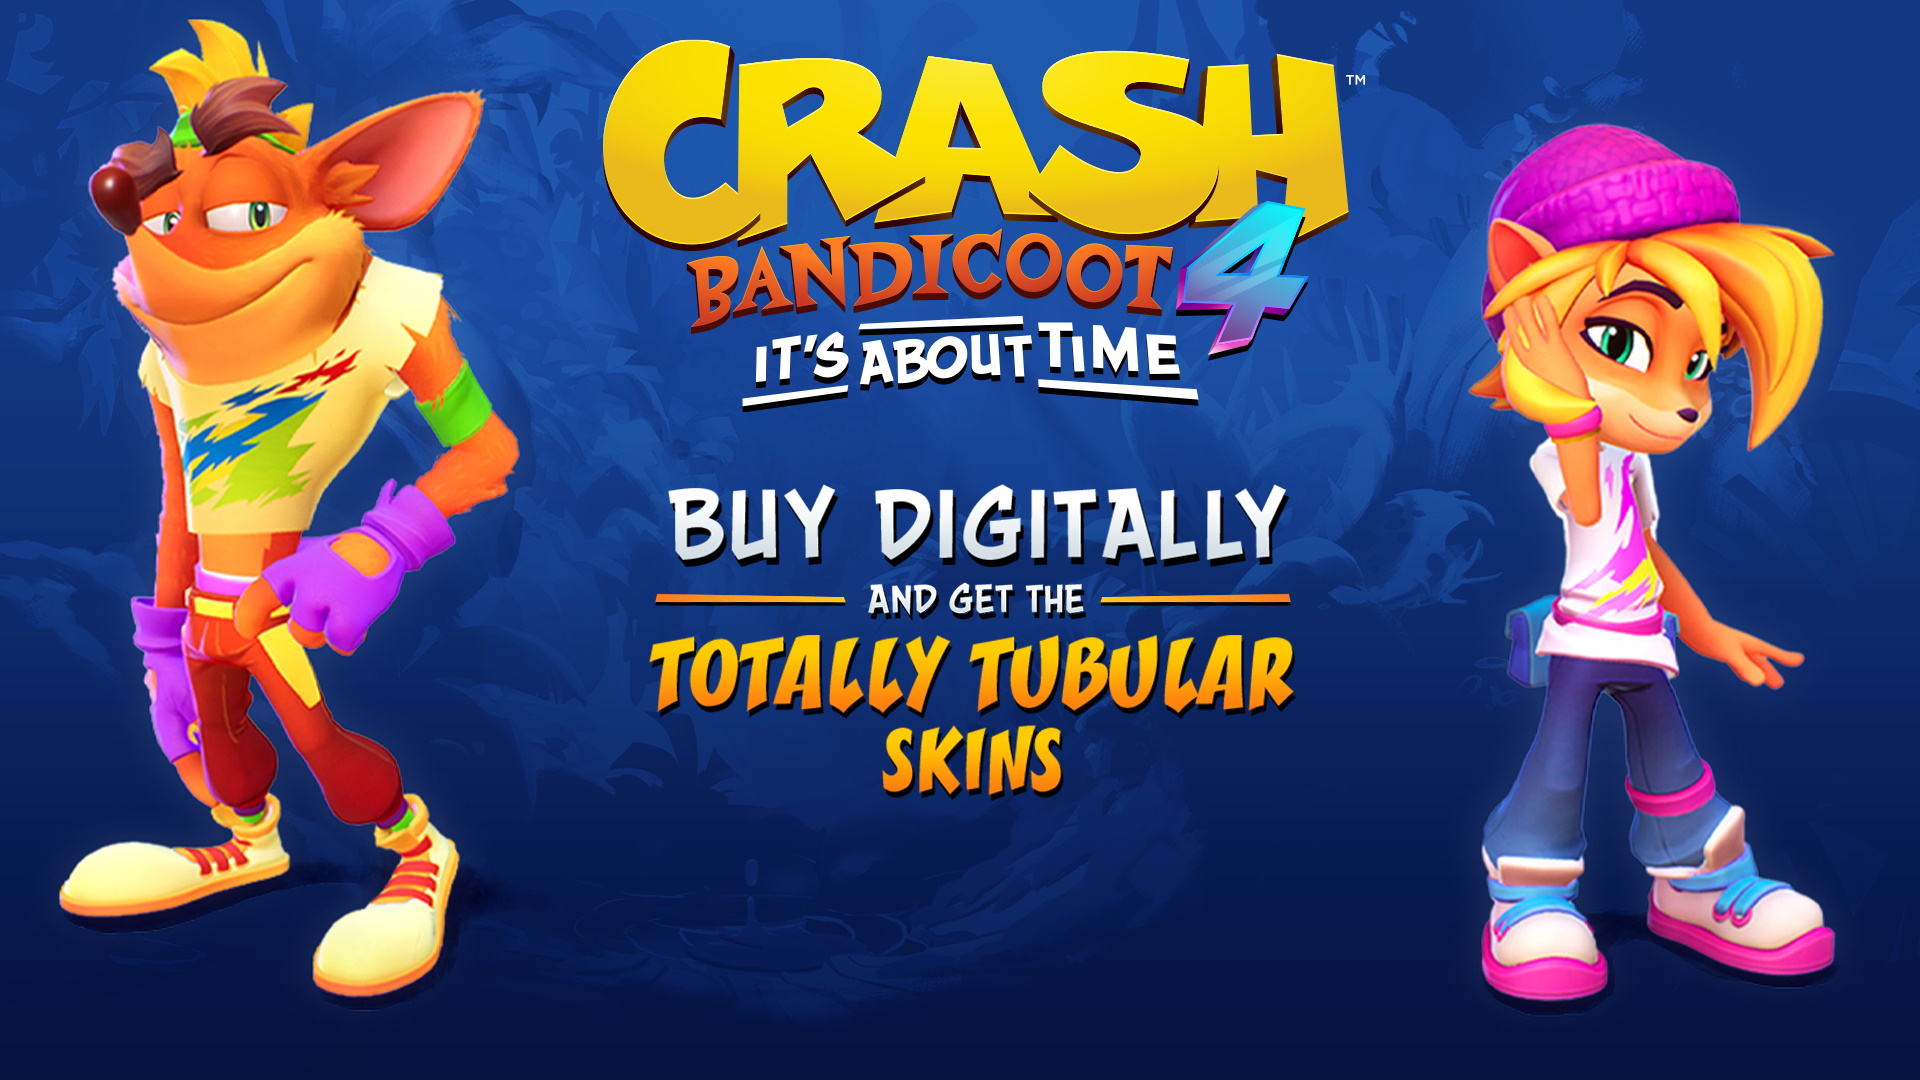 Crash Bandicoot™ 4 - Totally Tubular Skins